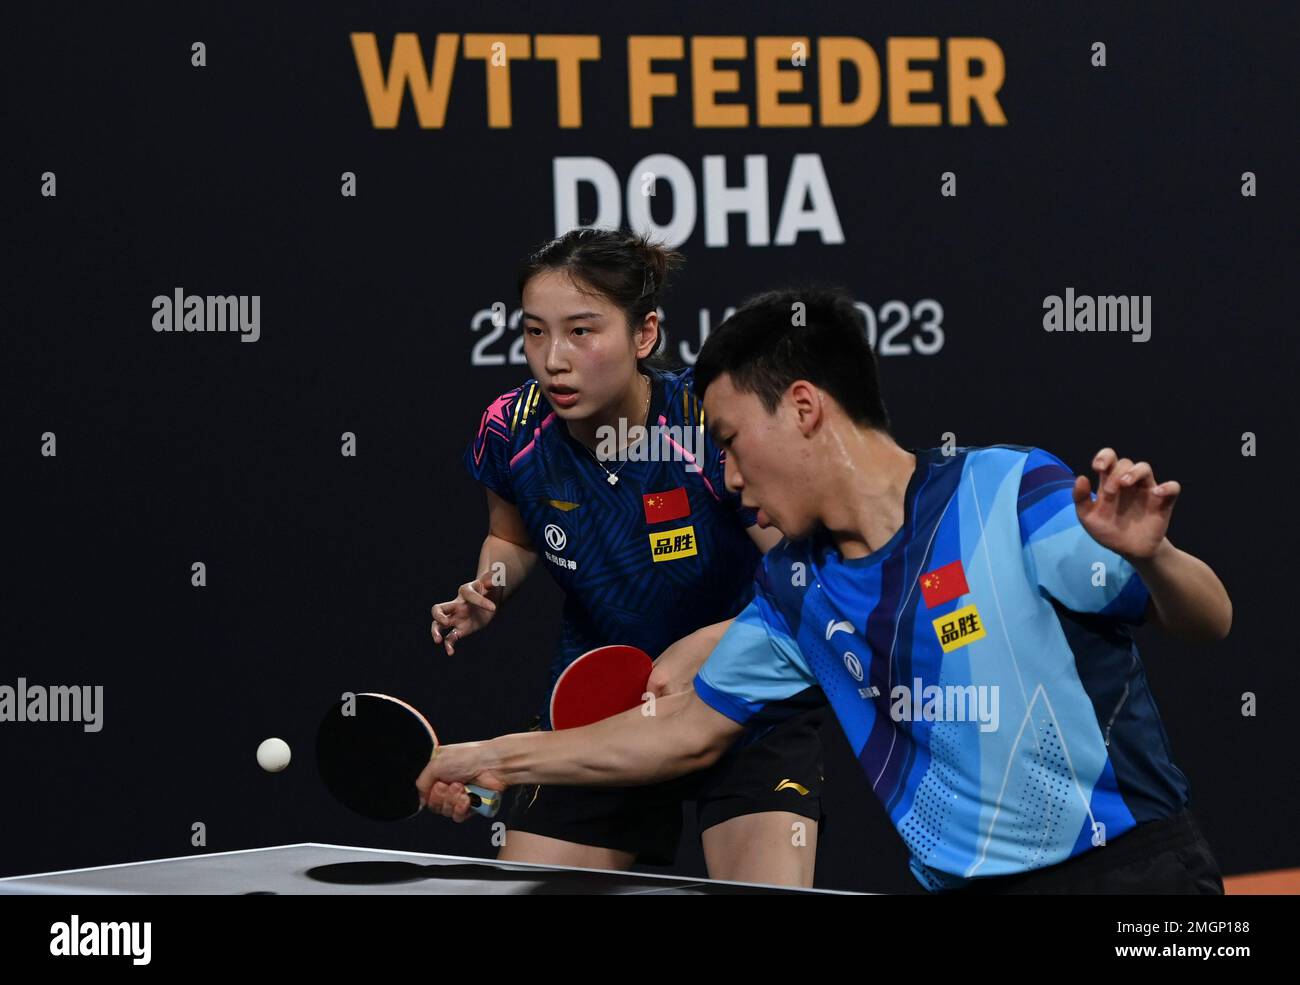 Doha, Qatar. 26th Jan, 2023. Qian Tianyi/Xiang Peng (R) of China compete during the mixed doubles final match against their compatriots Kuai Man/Lin Shidong at WTT Feeder Doha 2023 in Doha, Qatar, Jan. 26, 2023. Credit: Nikku/Xinhua/Alamy Live News Stock Photo